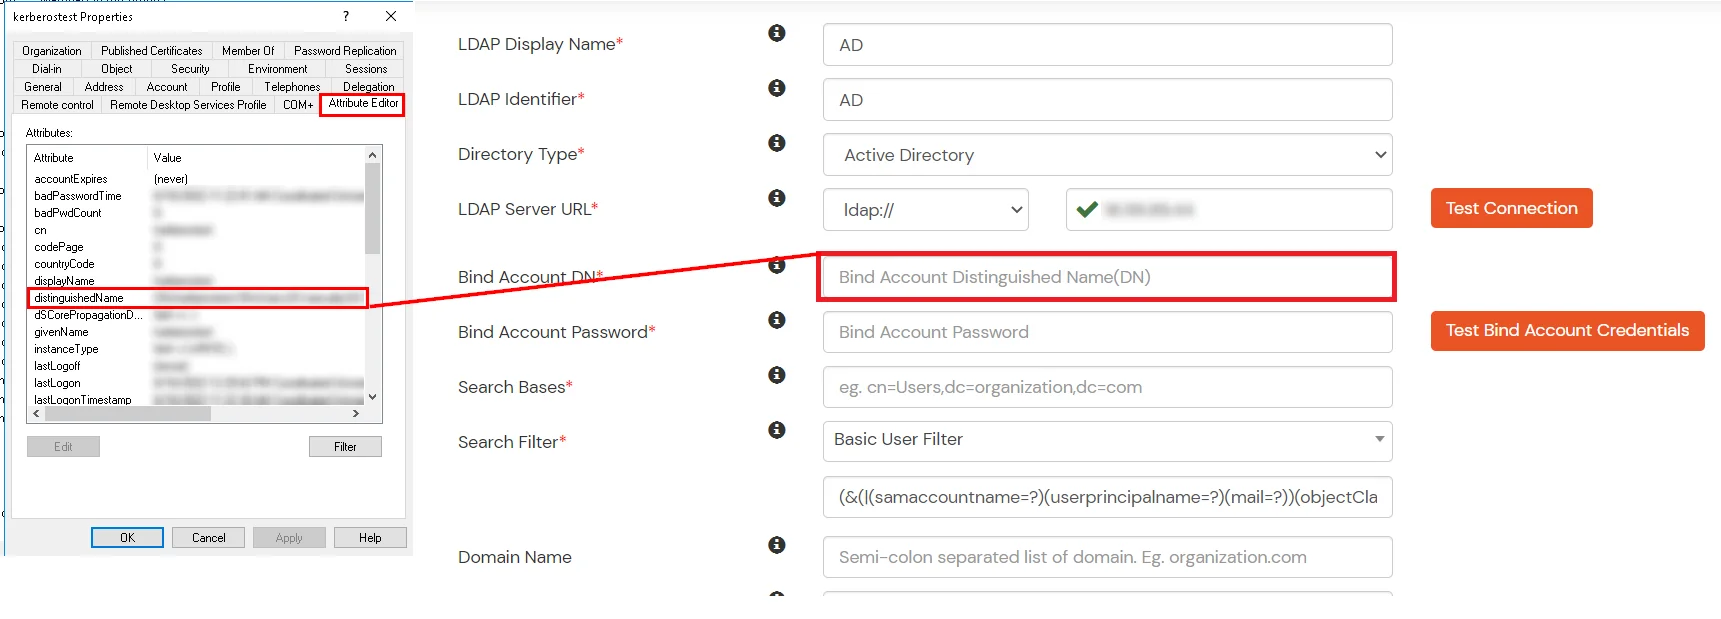 SAP WebGUI: Configure user bind account domain name